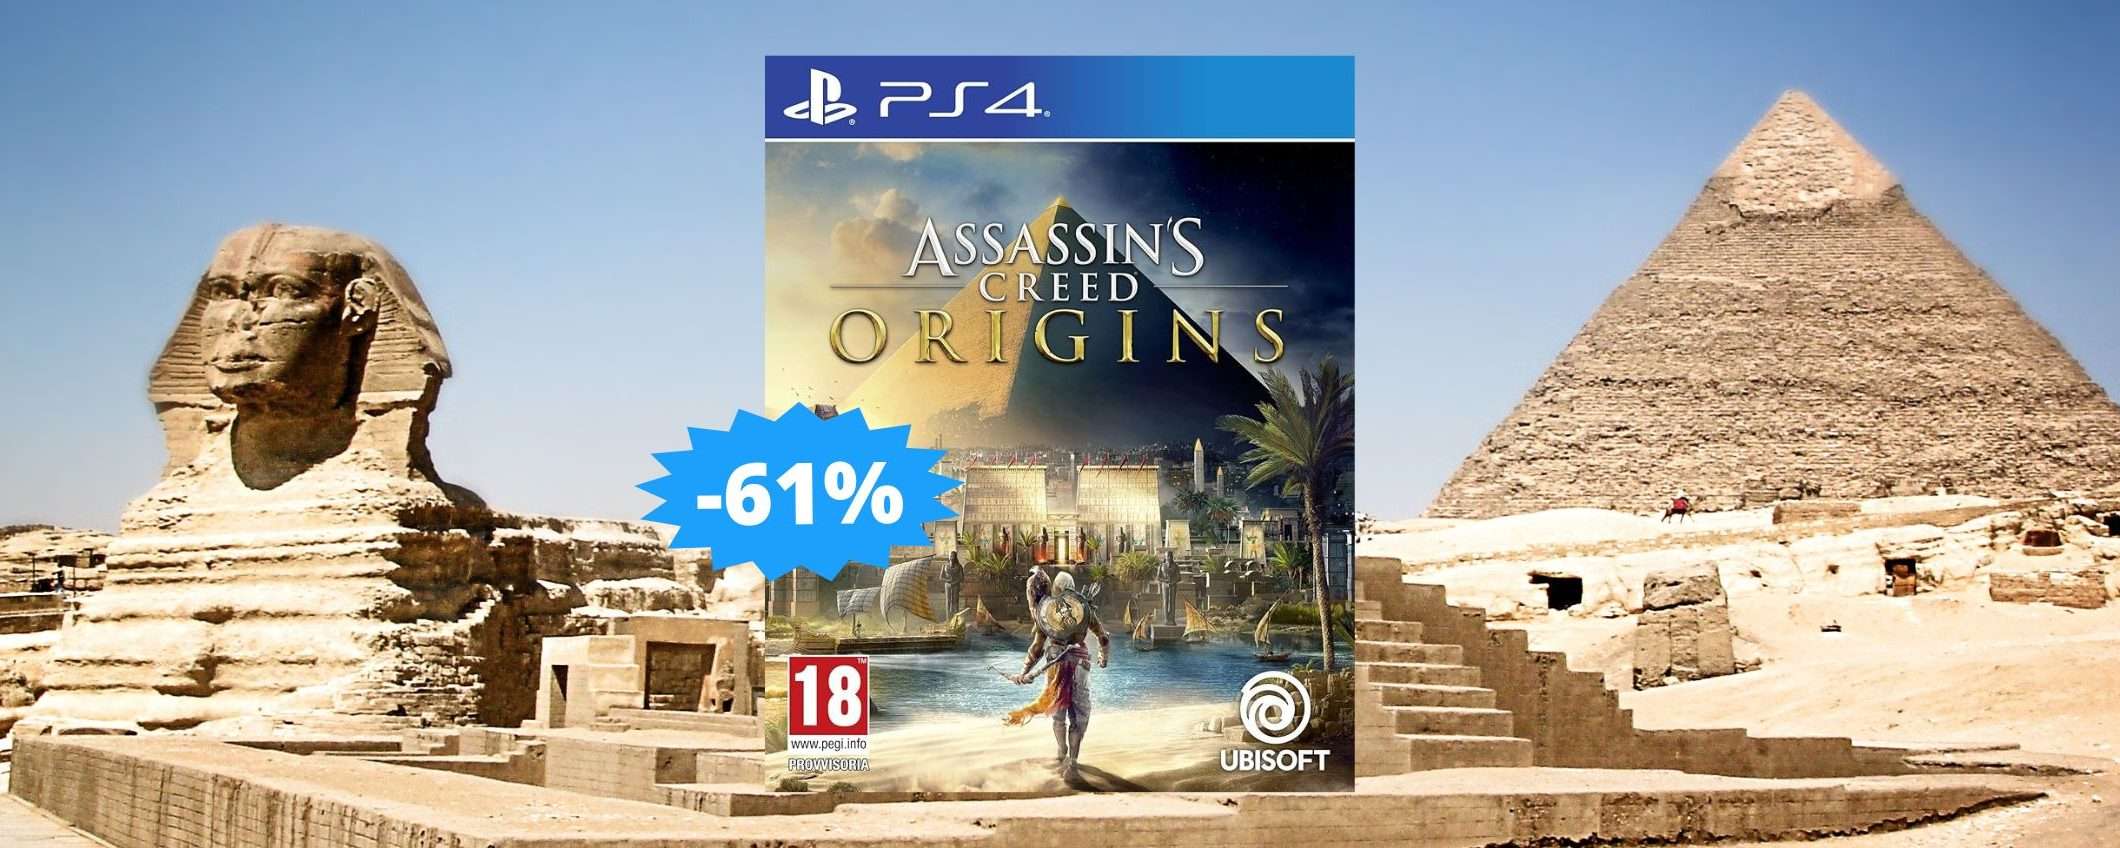 Assassin's Creed Origins per PS4: sconto FOLLE del 61%